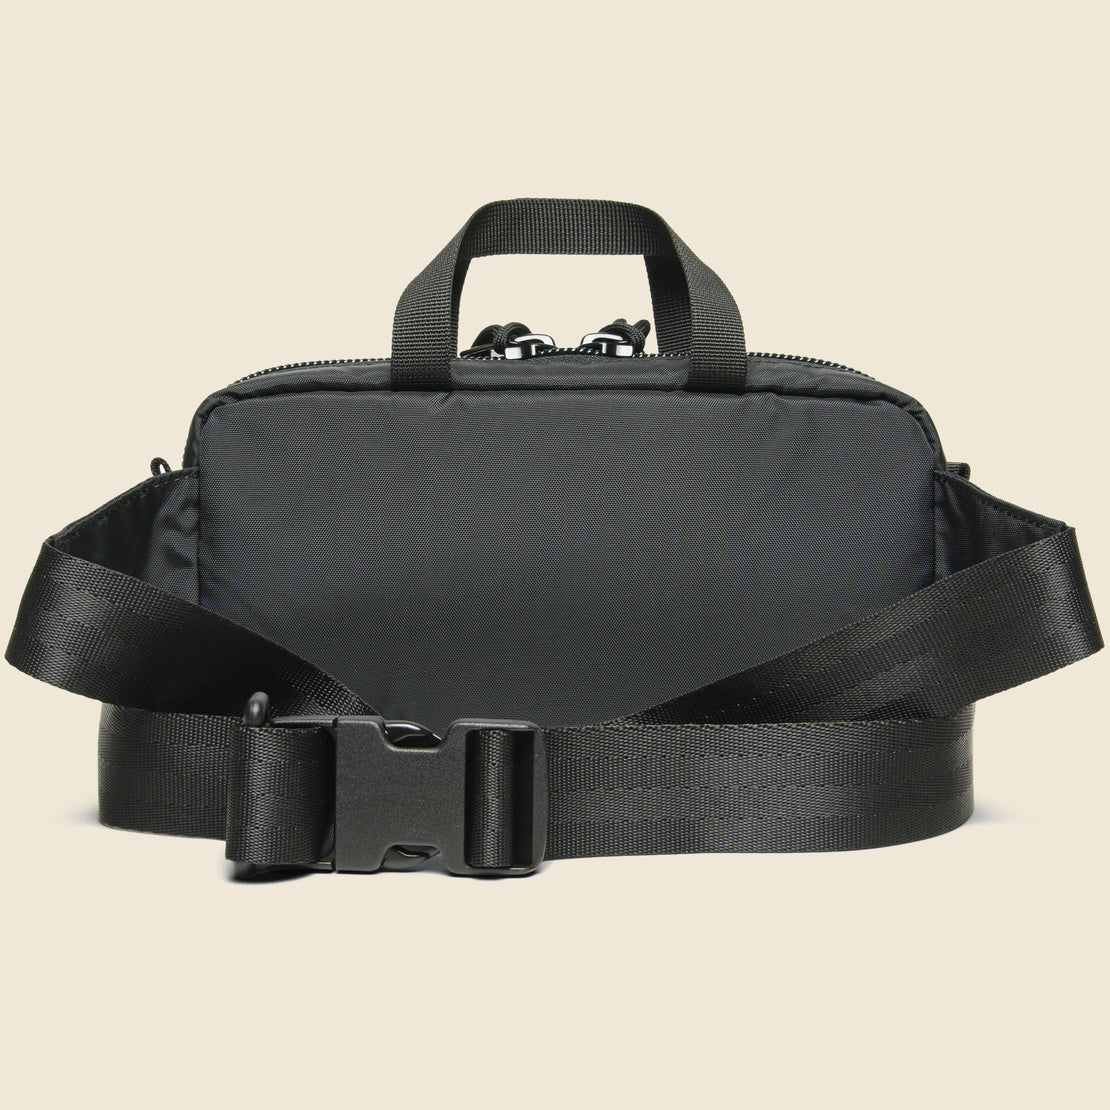 Mini Quick Pack - Black/Black - Topo Designs - STAG Provisions - Accessories - Bags / Luggage